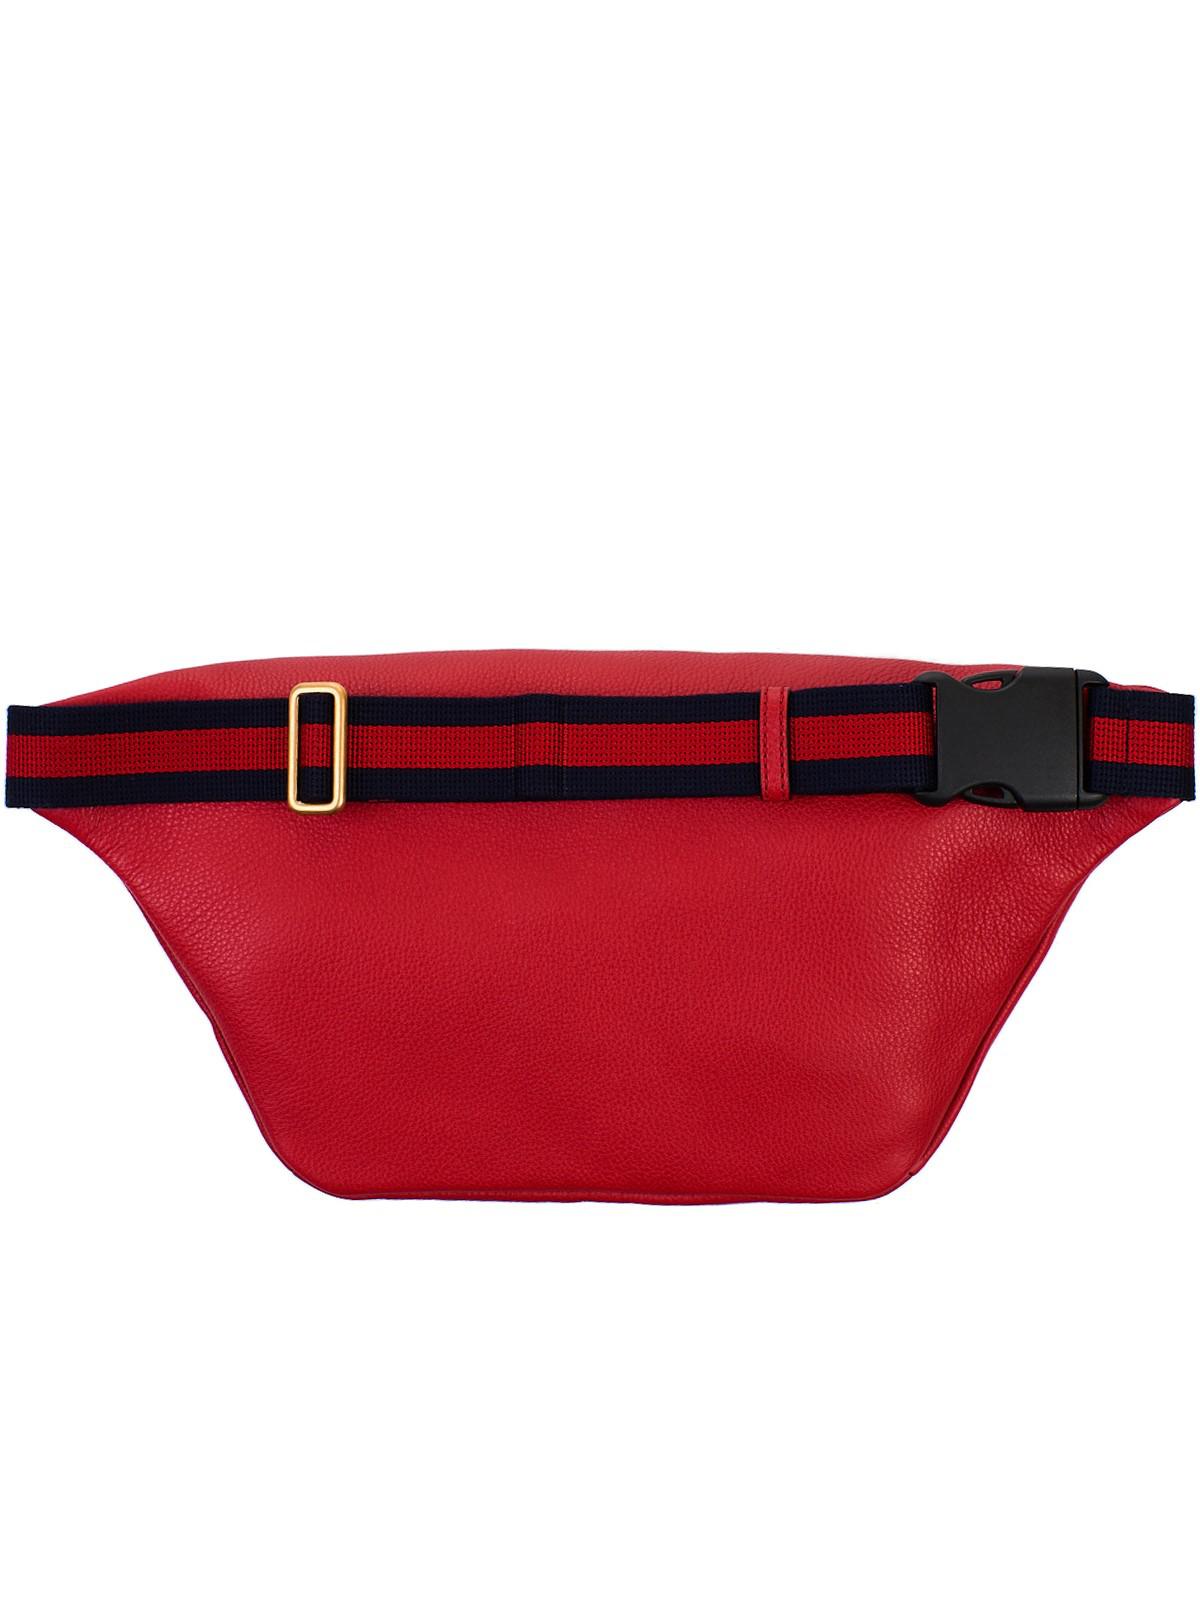 waist bag gucci red